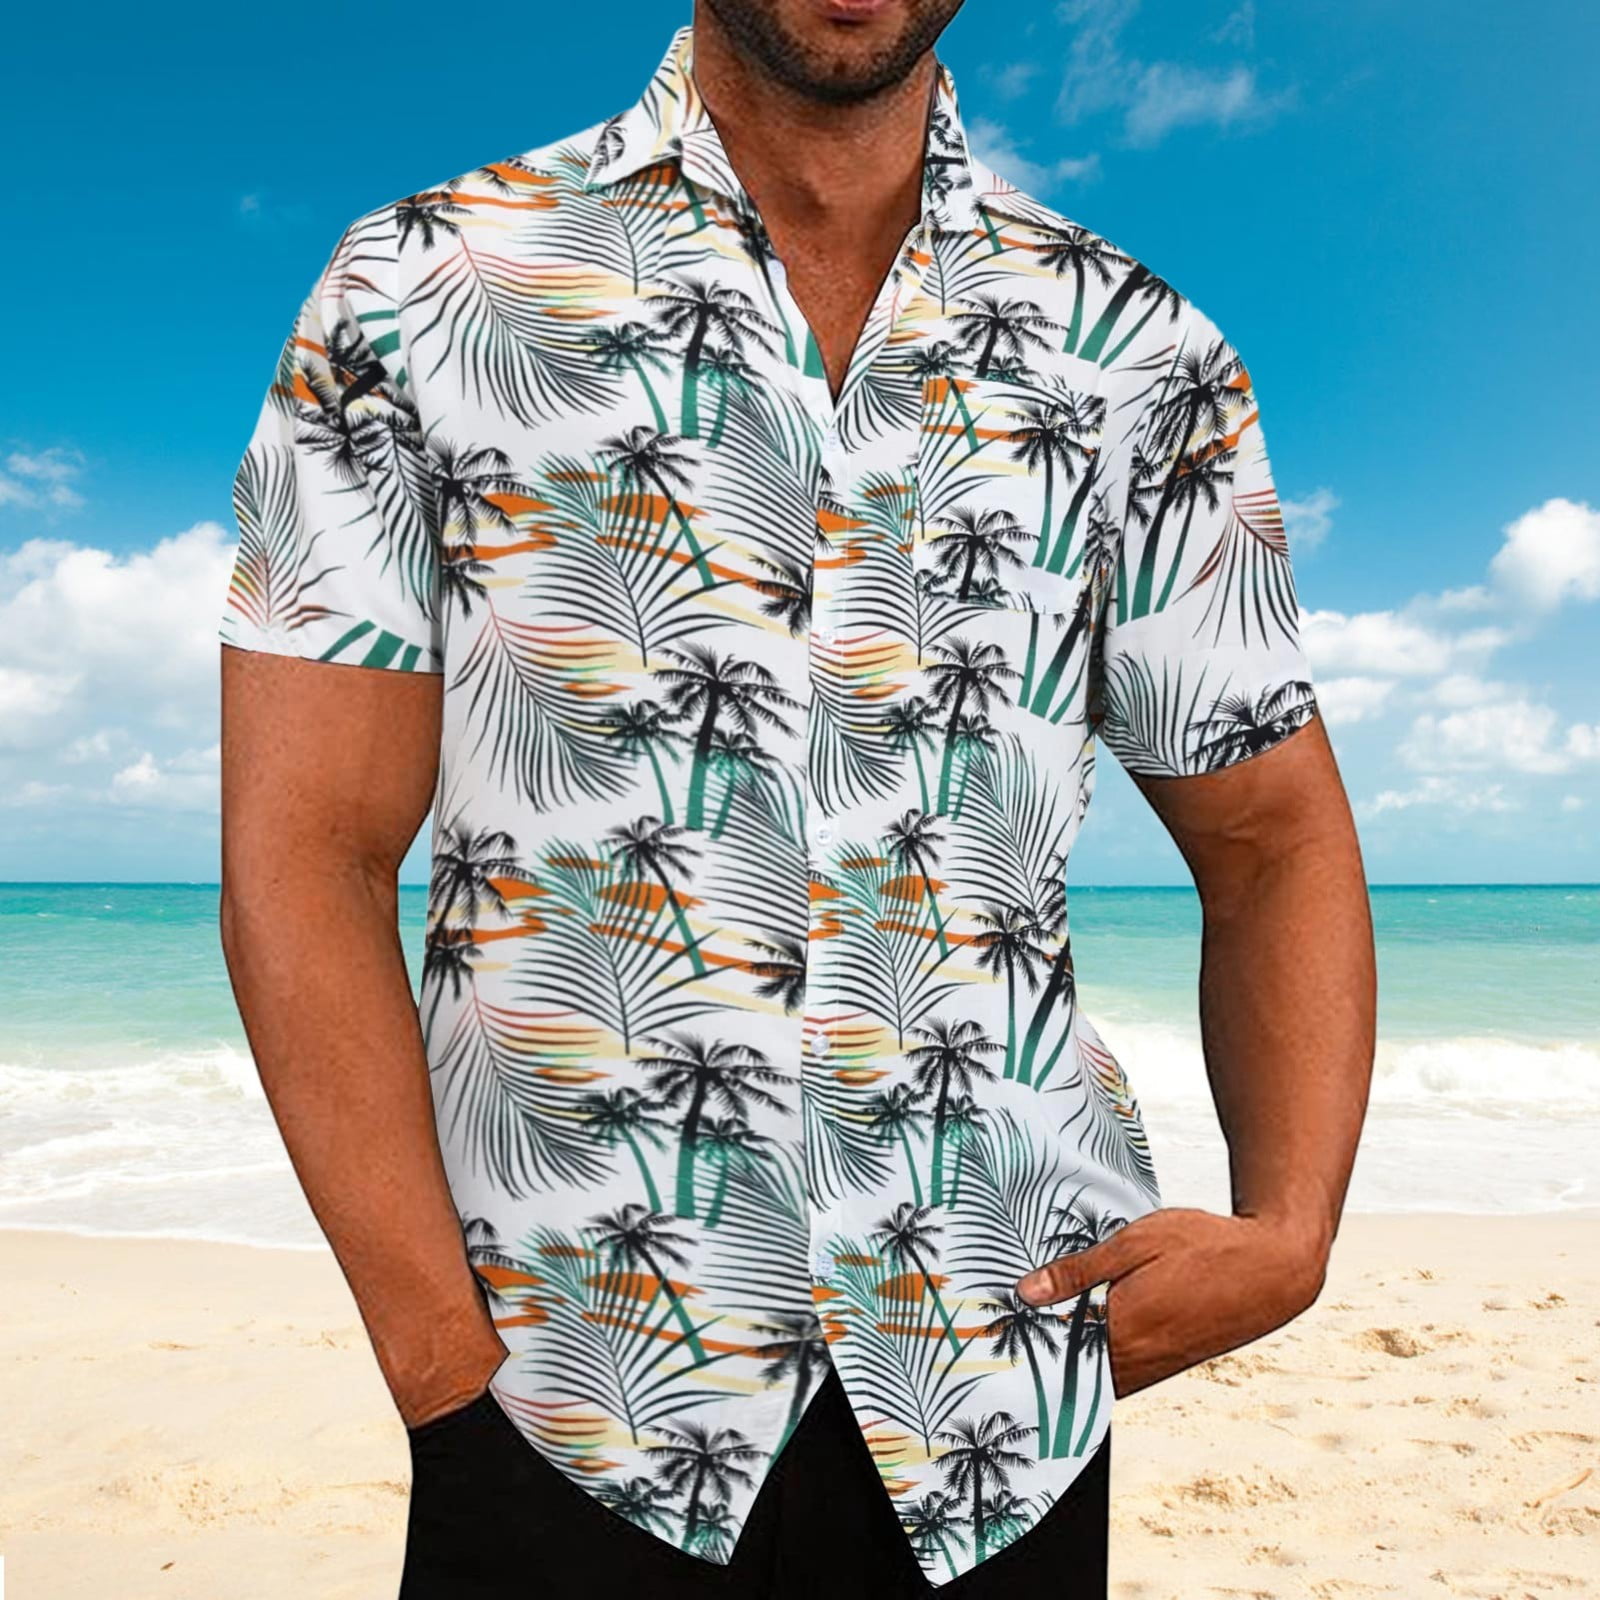 buy them safely Fashion Outfit Mens Beach Hawaiian Tropical Caribbean ...